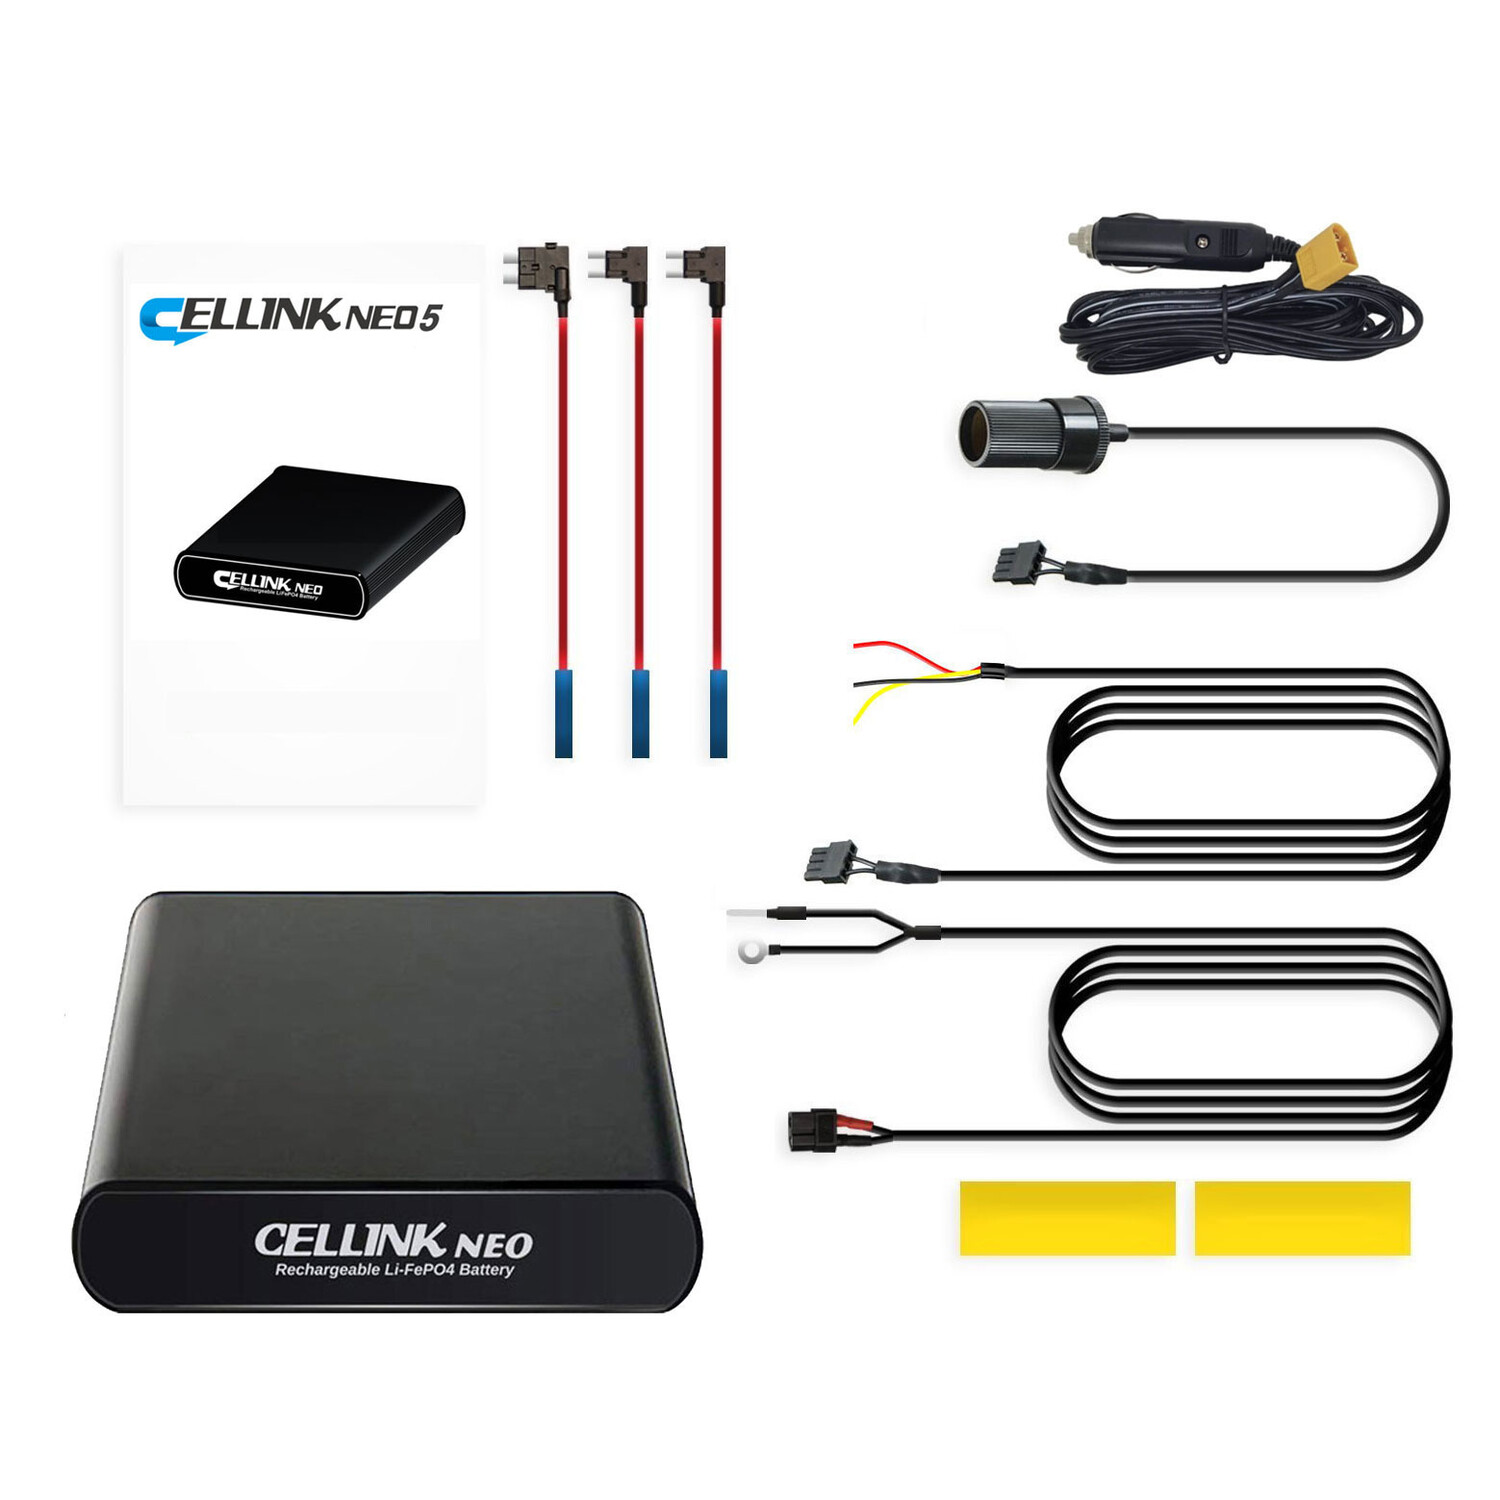 https://cdn.webshopapp.com/shops/280642/files/438992880/1500x1500x2/cellink-cellink-neo-5-4500mah-dashcam-battery-pack.jpg